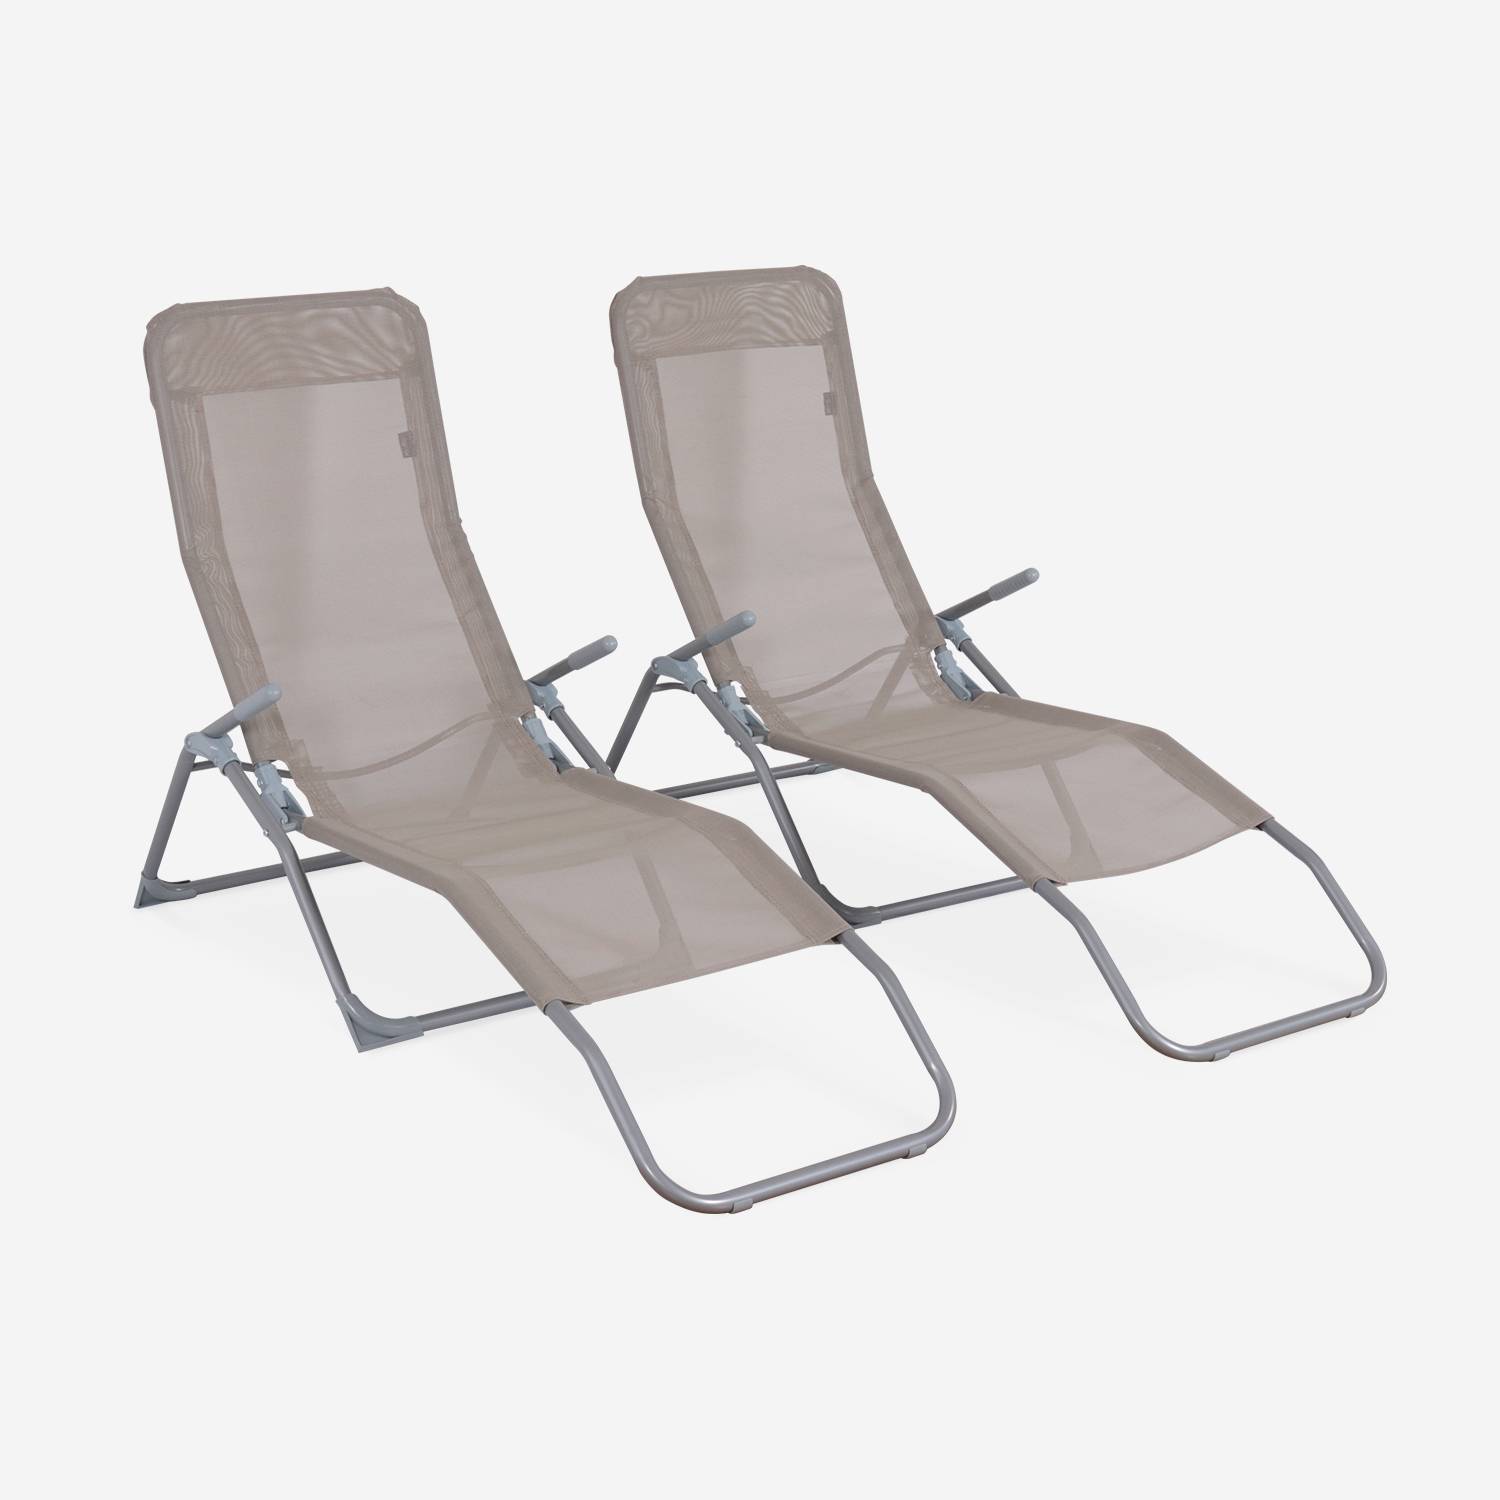 Set van 2 opvouwbare ligstoelen - Levito Taupe - Ligstoelen van textileen, 2 posities, opvouwbare ligstoelen Photo2